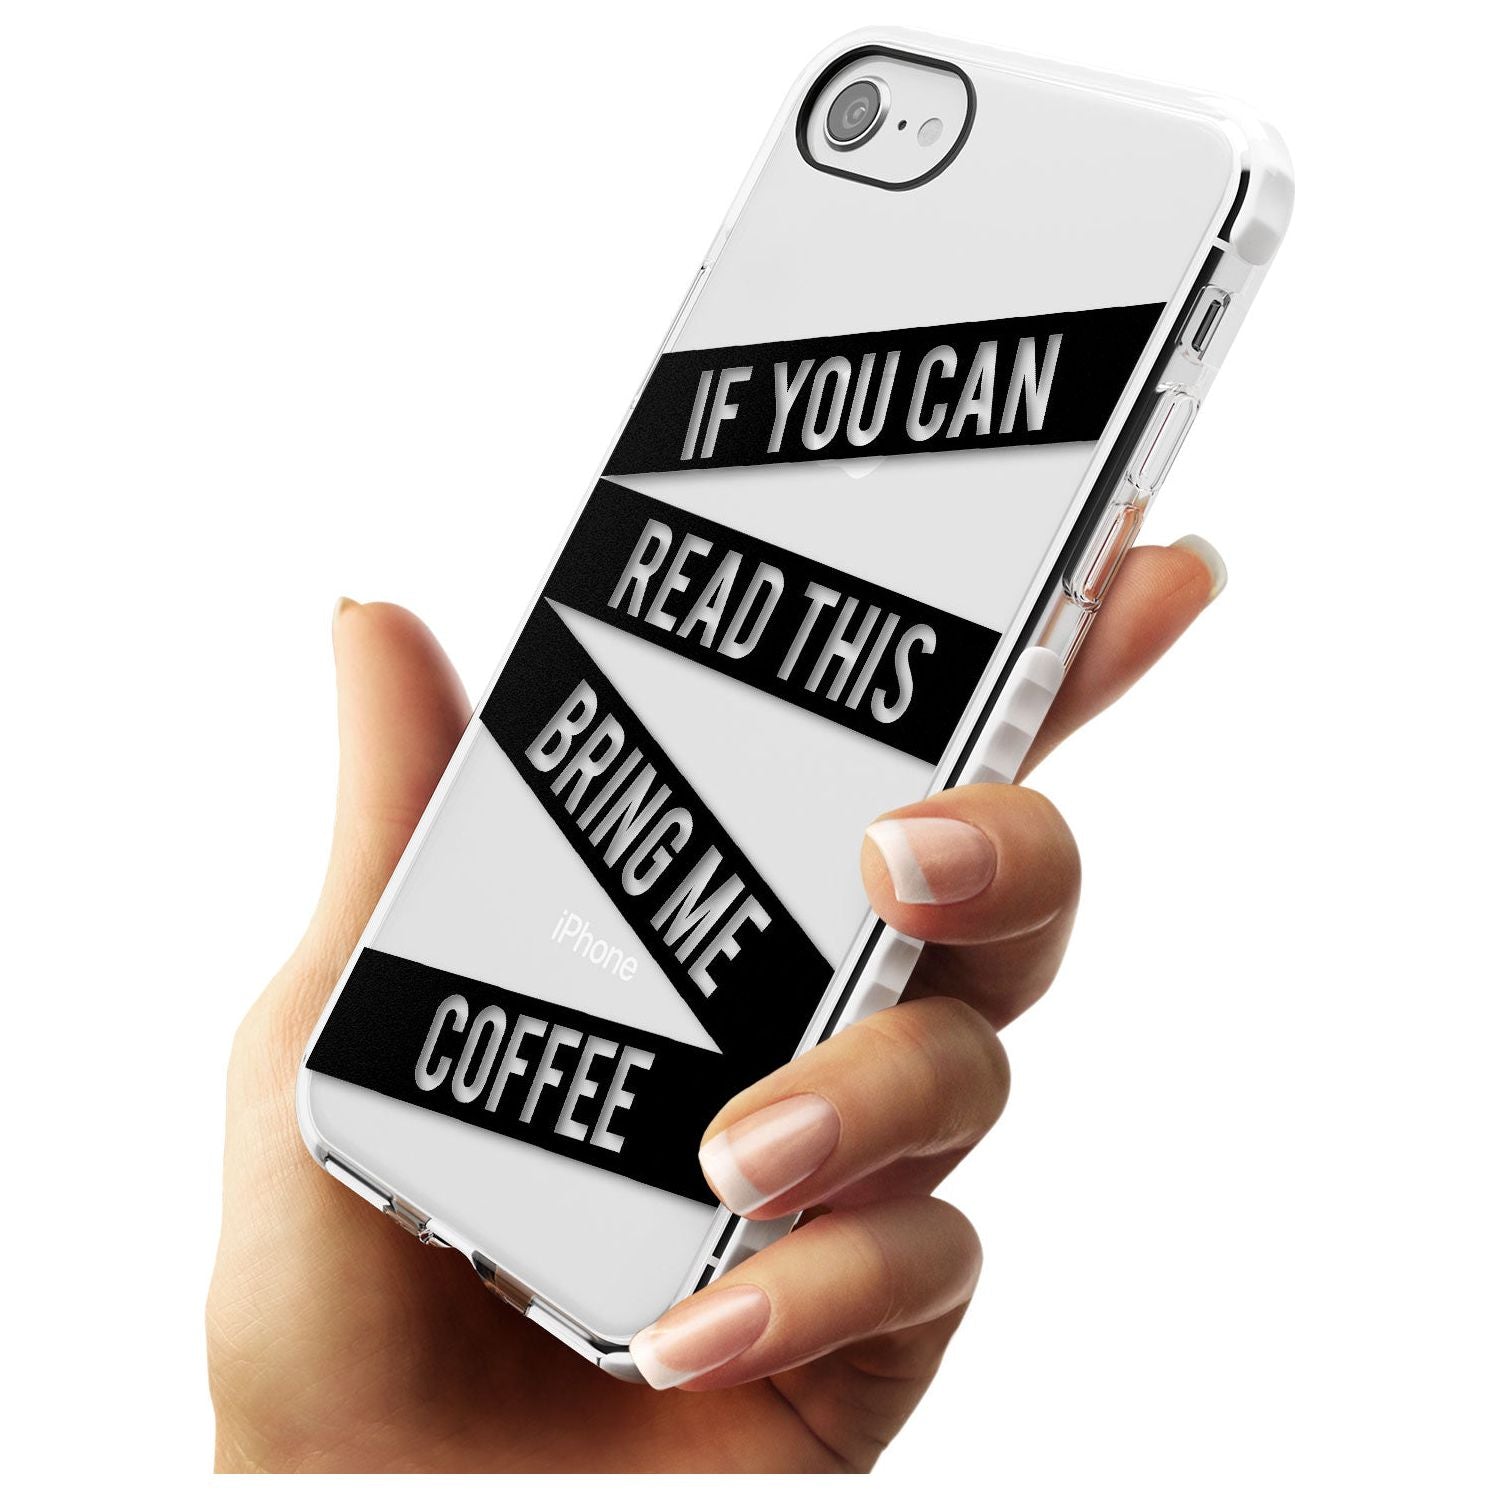 Black Stripes Bring Me Coffee Impact Phone Case for iPhone SE 8 7 Plus